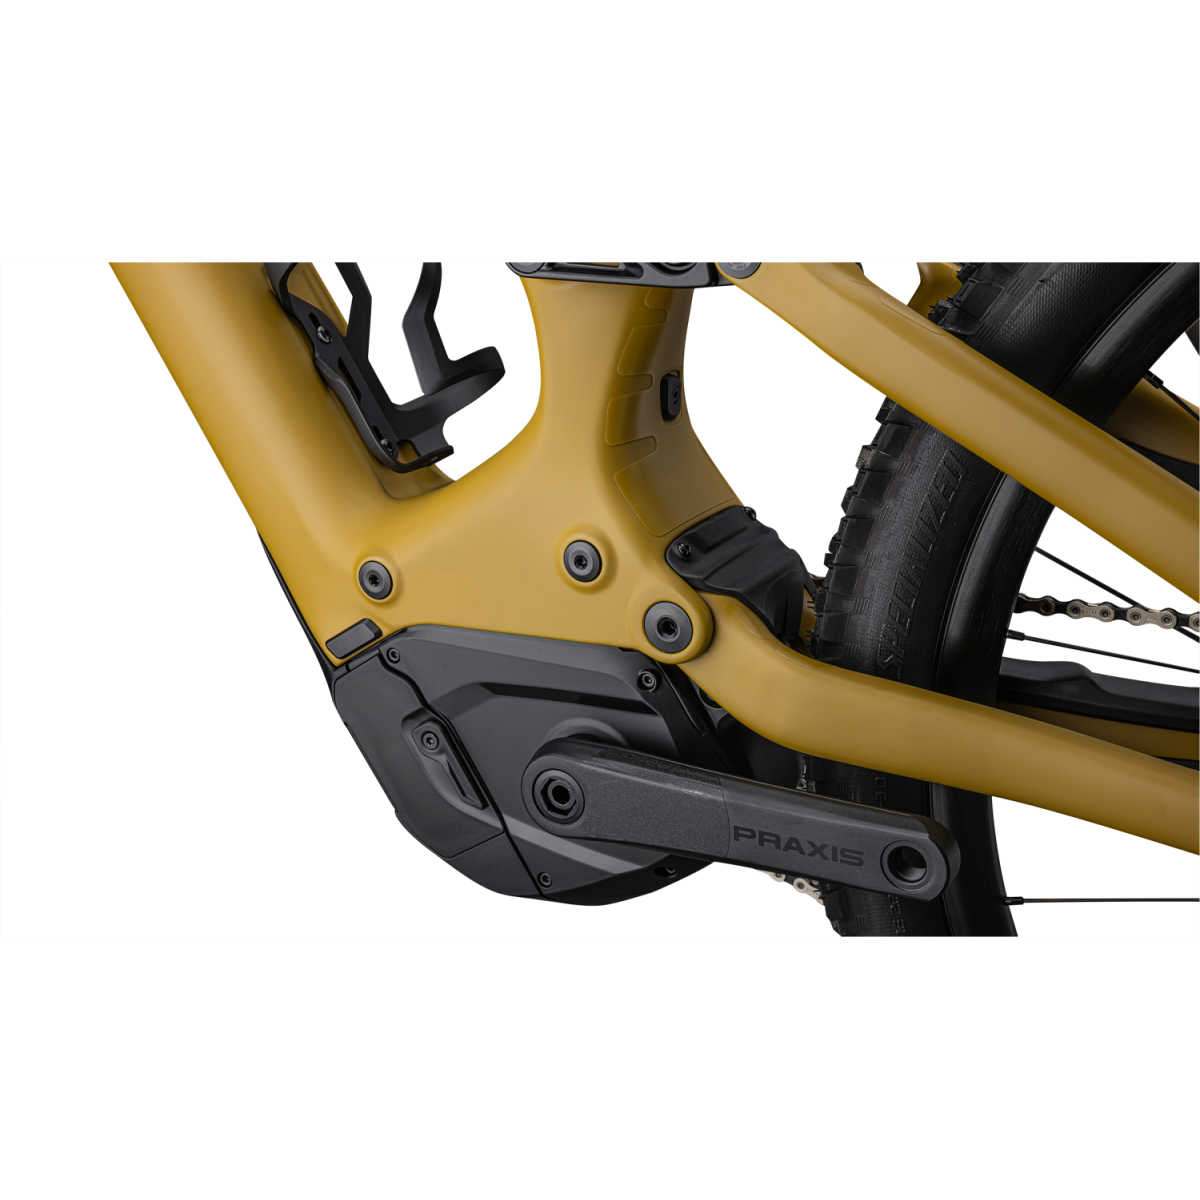 Specialized Turbo Levo Expert elektrinis dviratis / Satin Harvest Gold